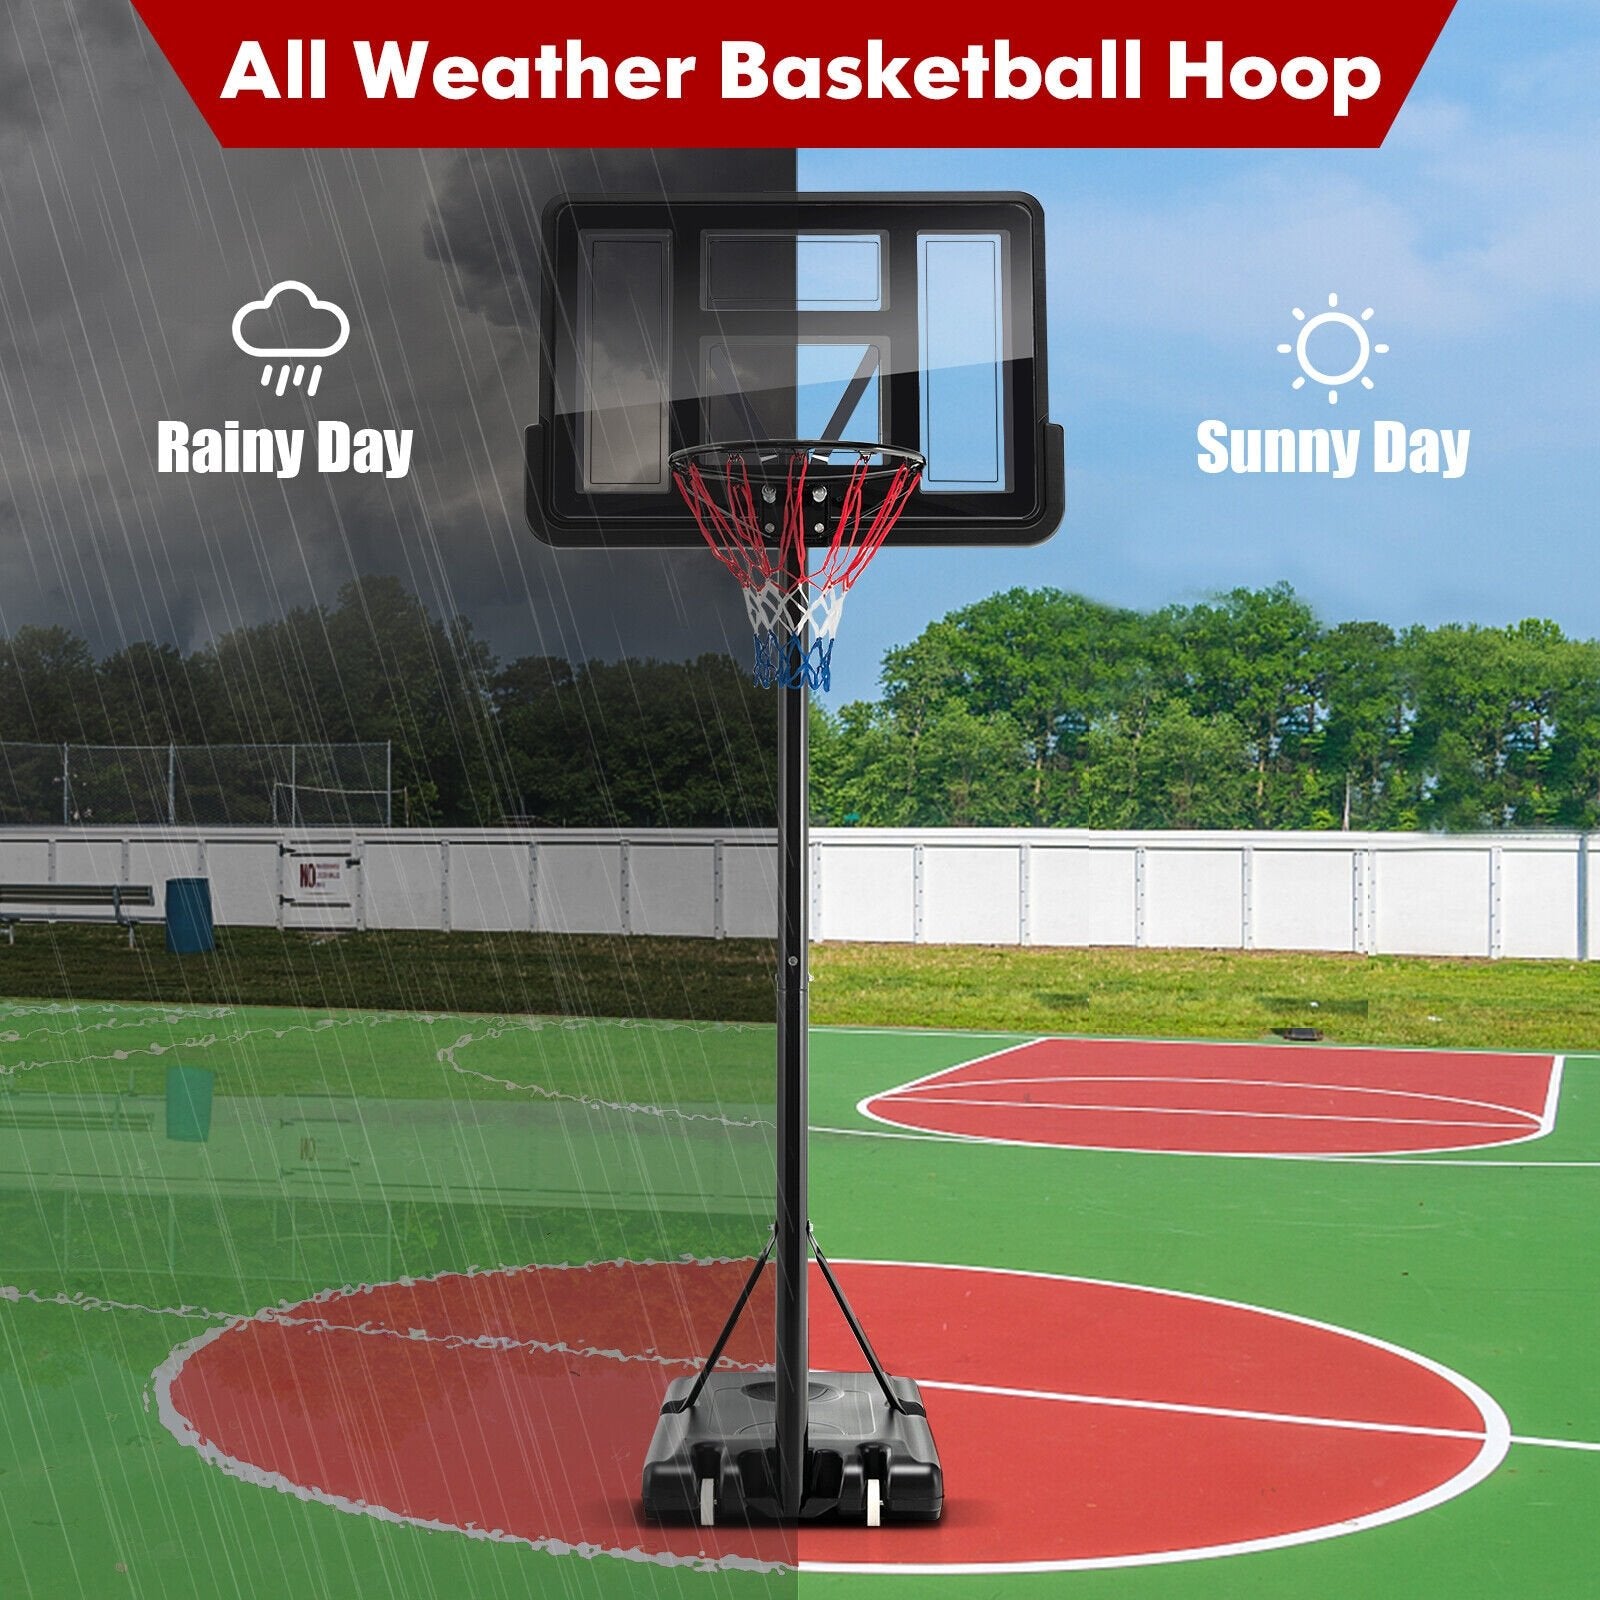 4.25-10 Feet Adjustable Basketball Hoop System with 44 Inch Backboard-A, Black - Gallery Canada